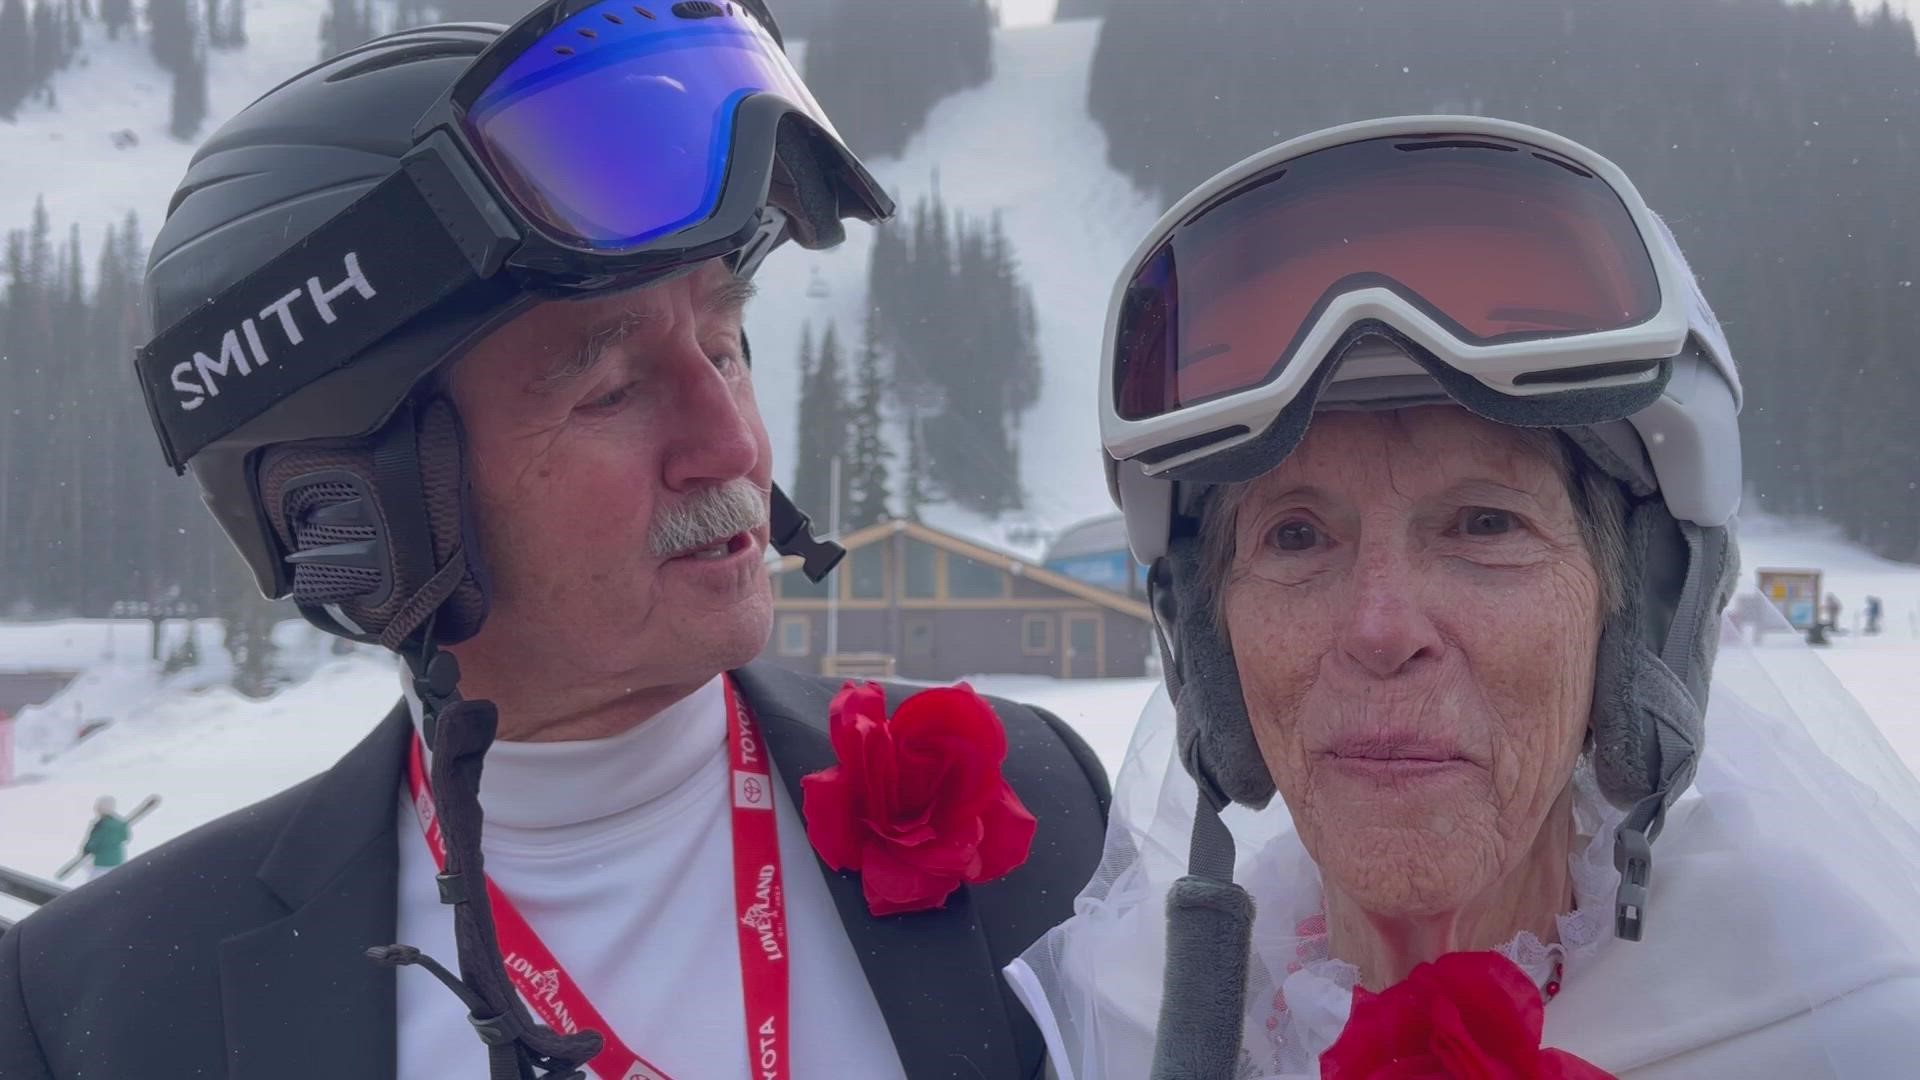 Video provided by Loveland Ski Area in Colorado.